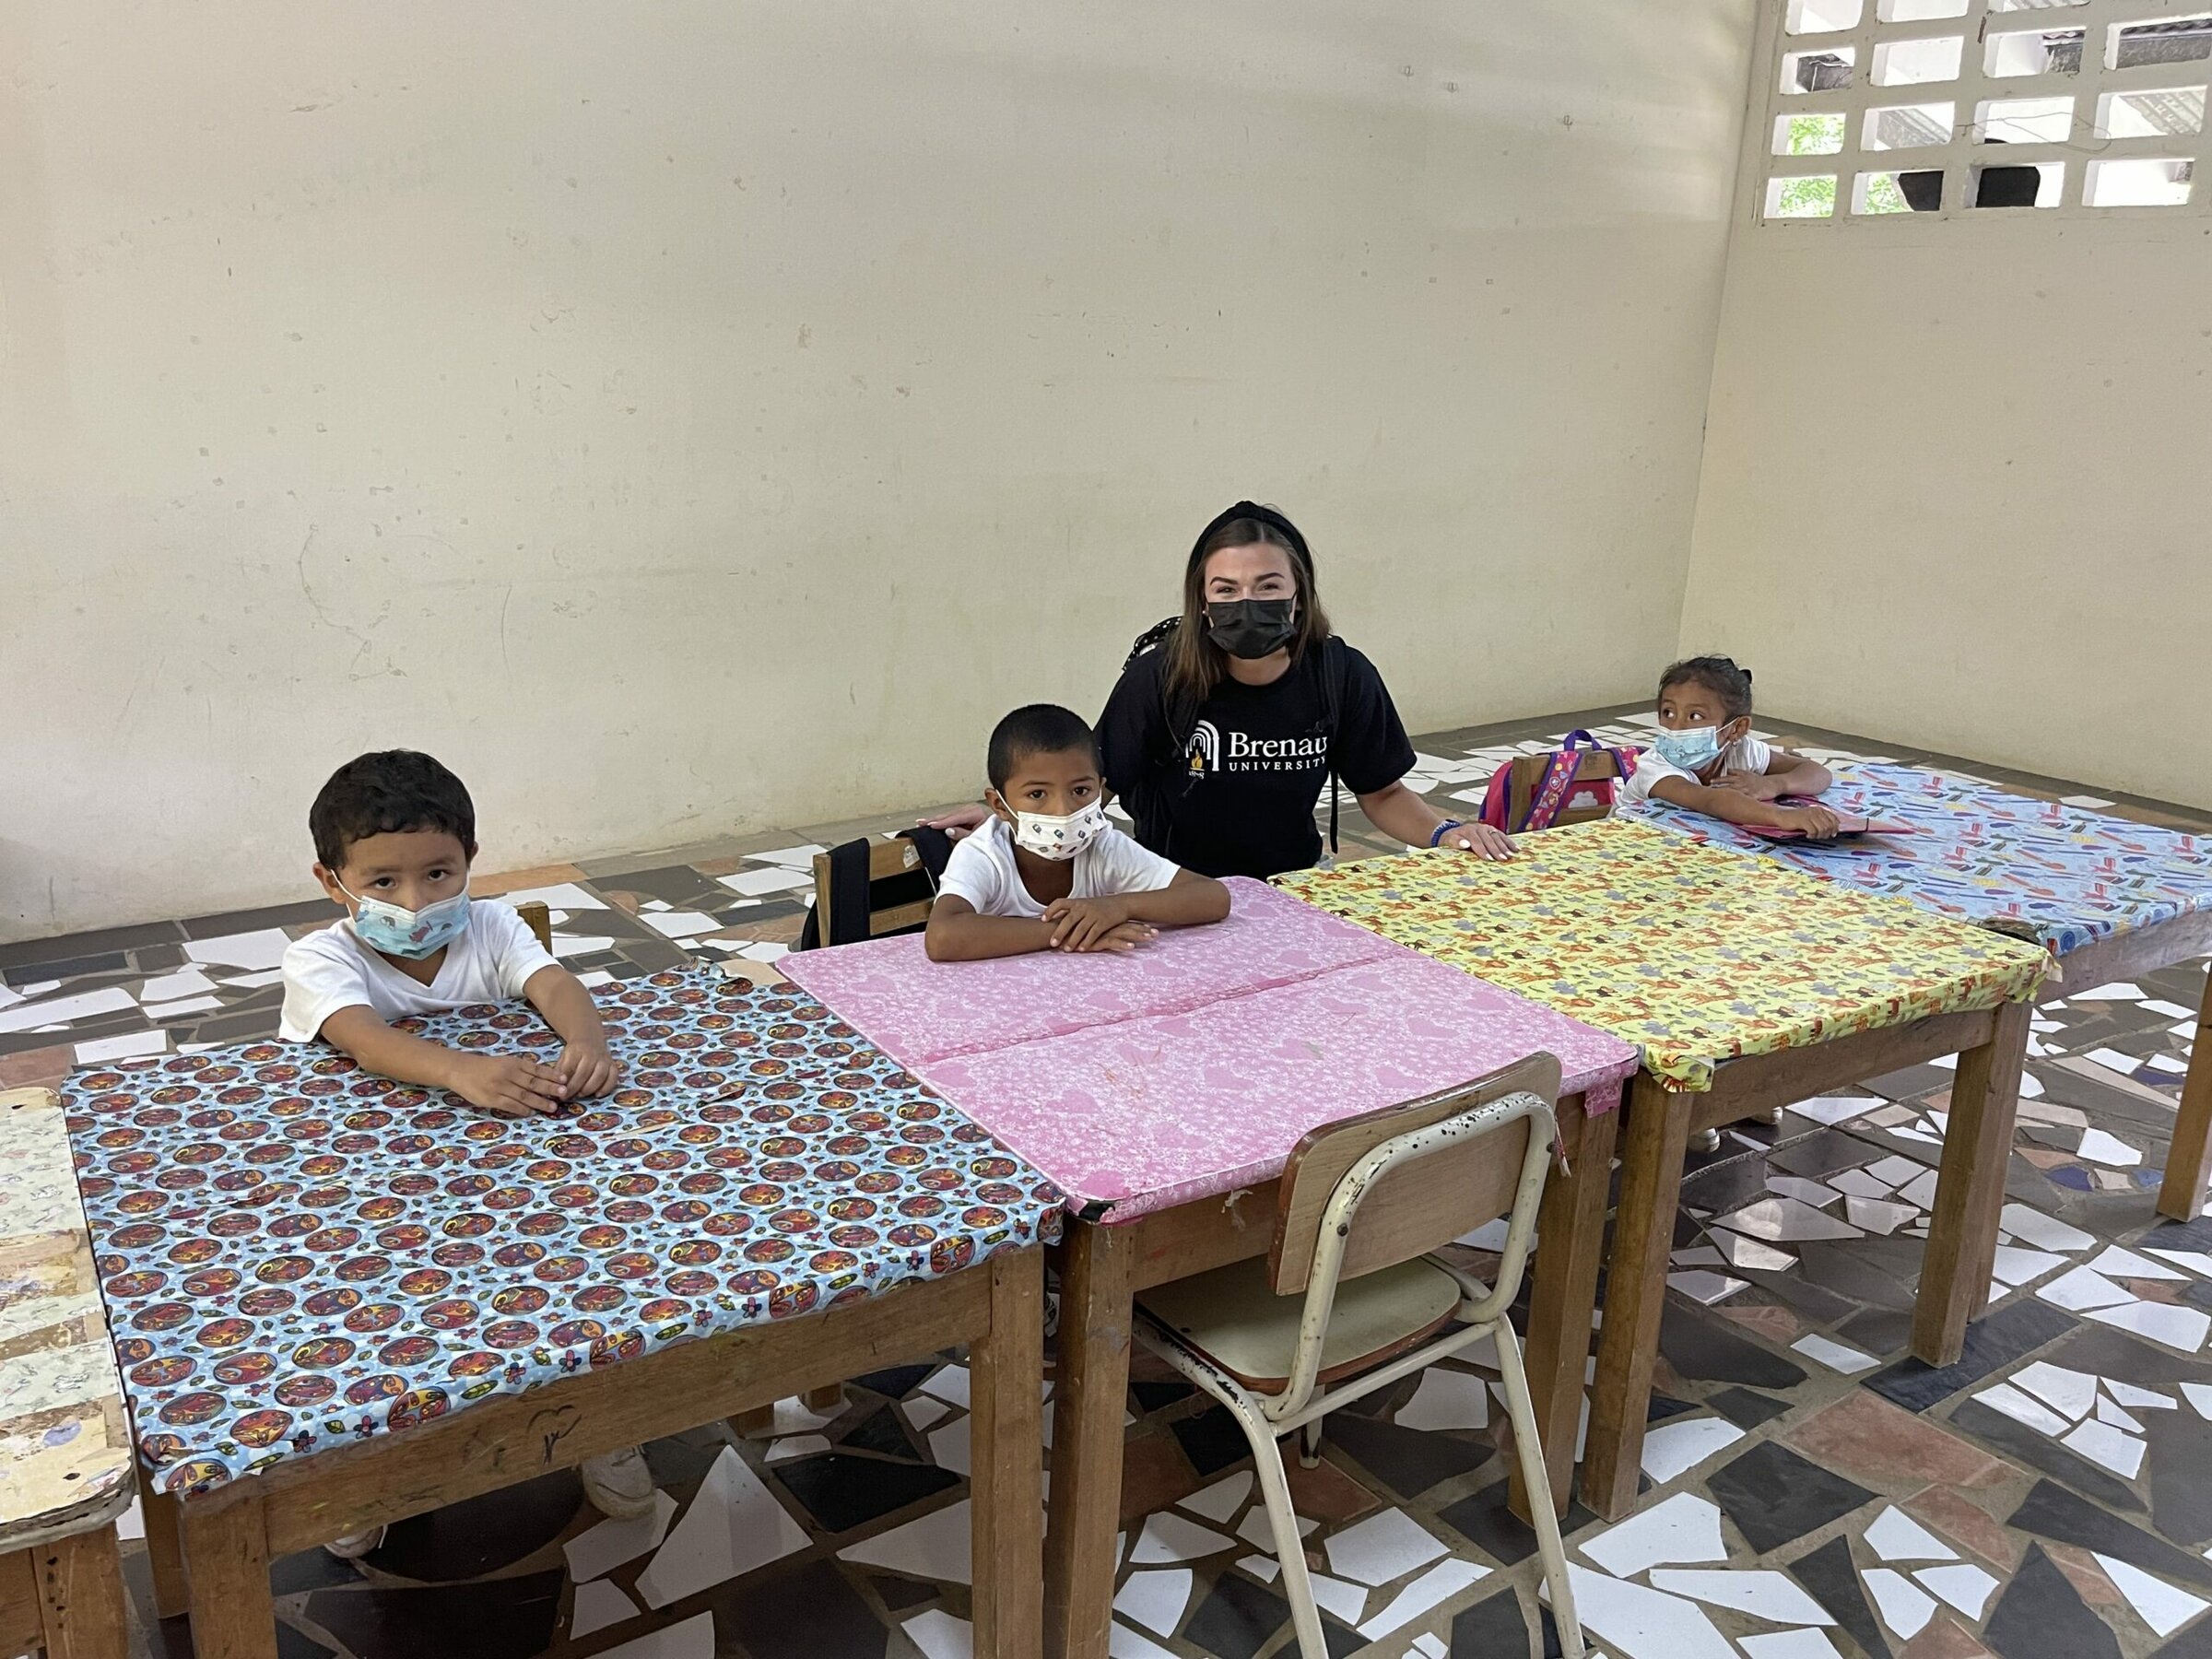 Annabeth Vandiver poses with three school children in Panama